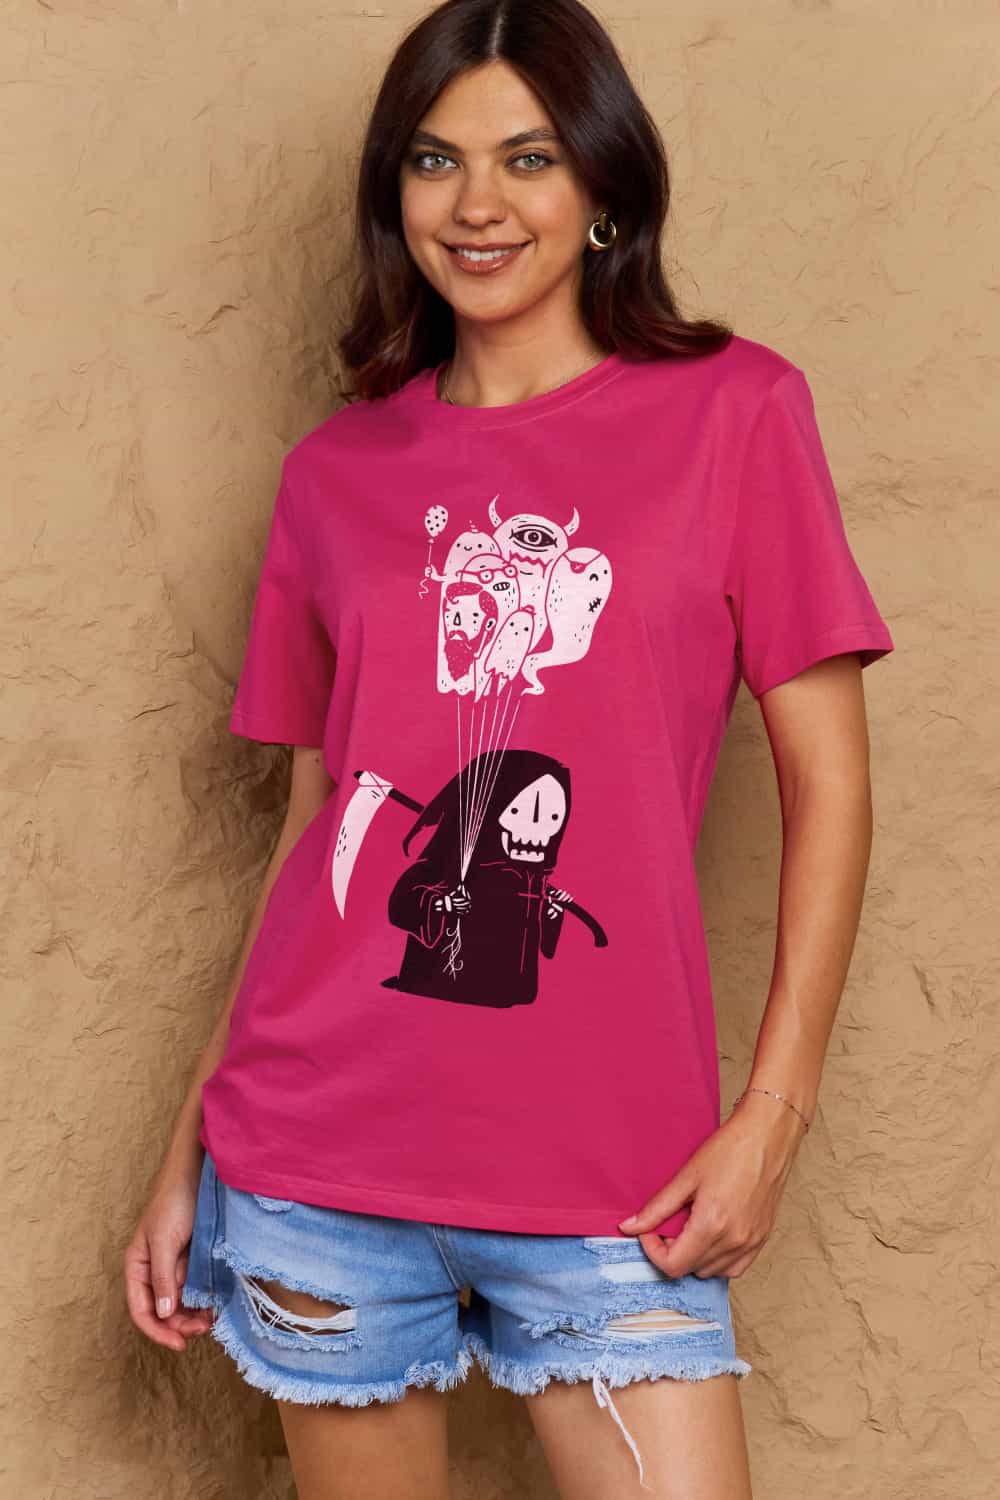 Malibu Dreams Simply Love Full Size Death Graphic T-Shirt